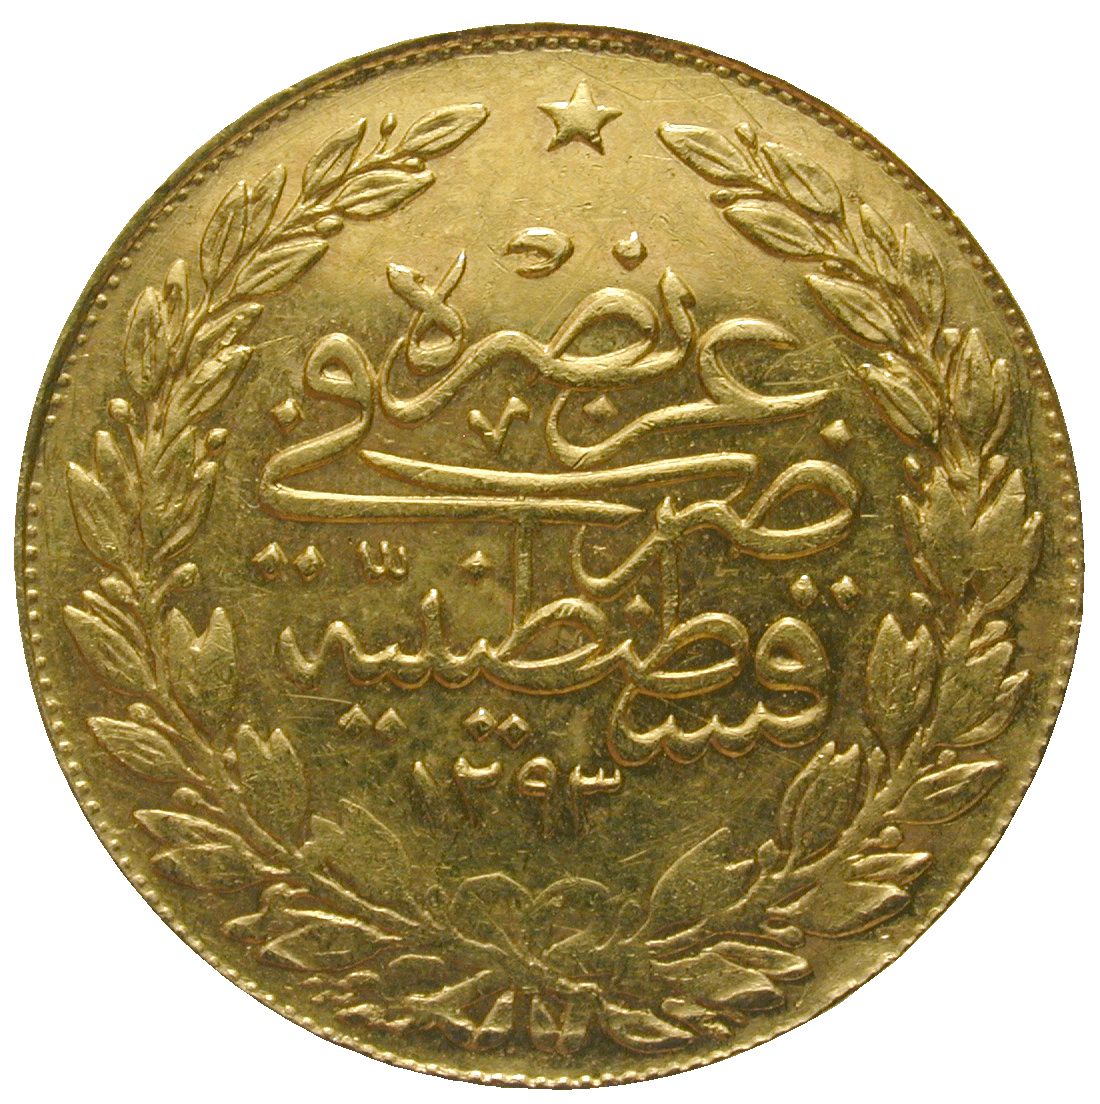 Ottoman Empire, Abdülhamid II, 100 Piaster Year 22 (reverse)